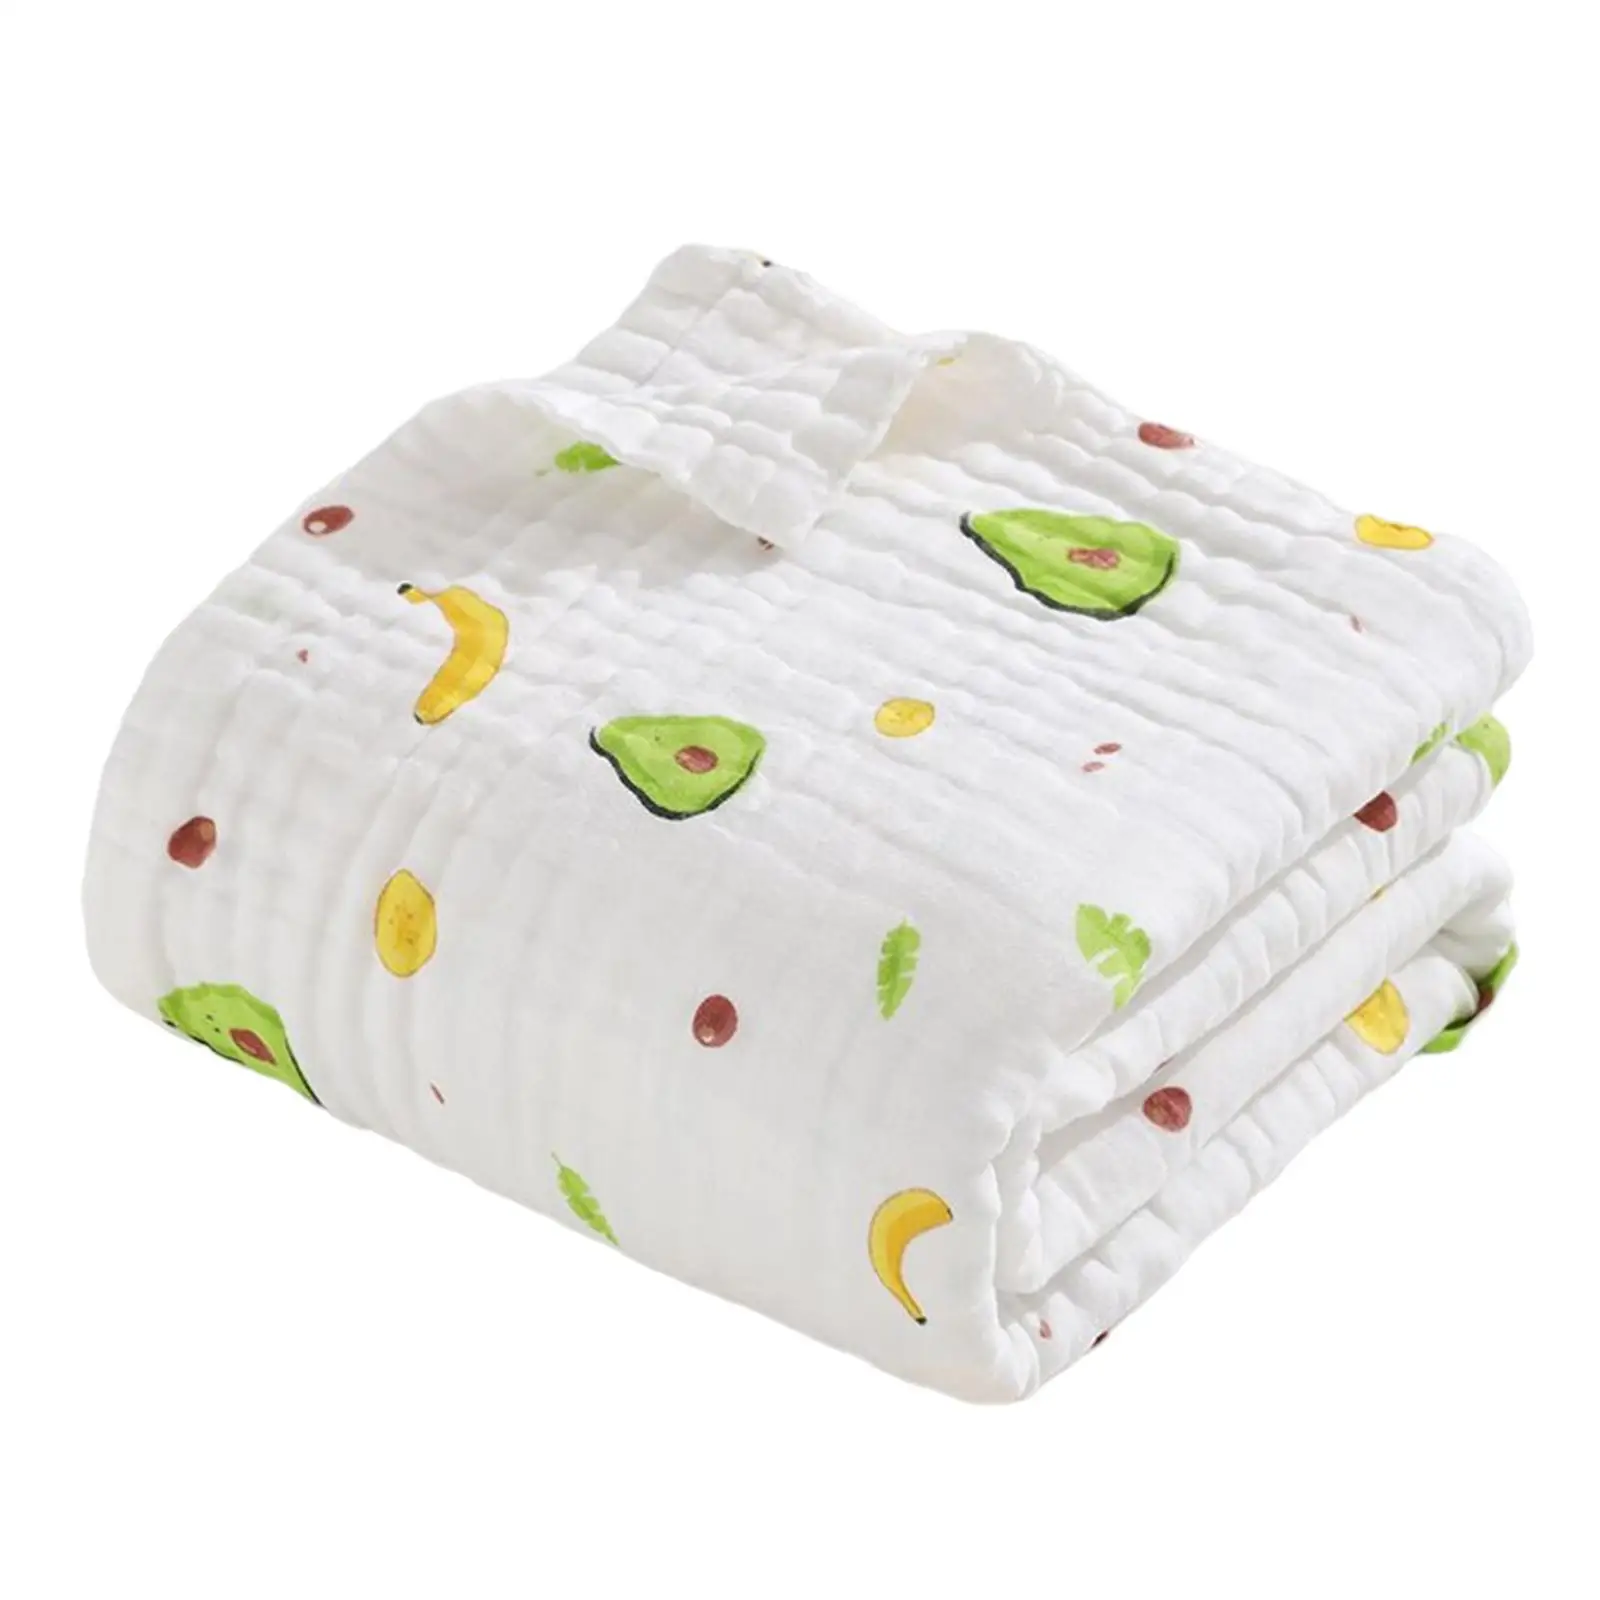 110x110cm bath Towel Thick Cotton Comfortable Breathable Square Boys Girls Washcloths Wash Cloth Child Body Wrap Blanket